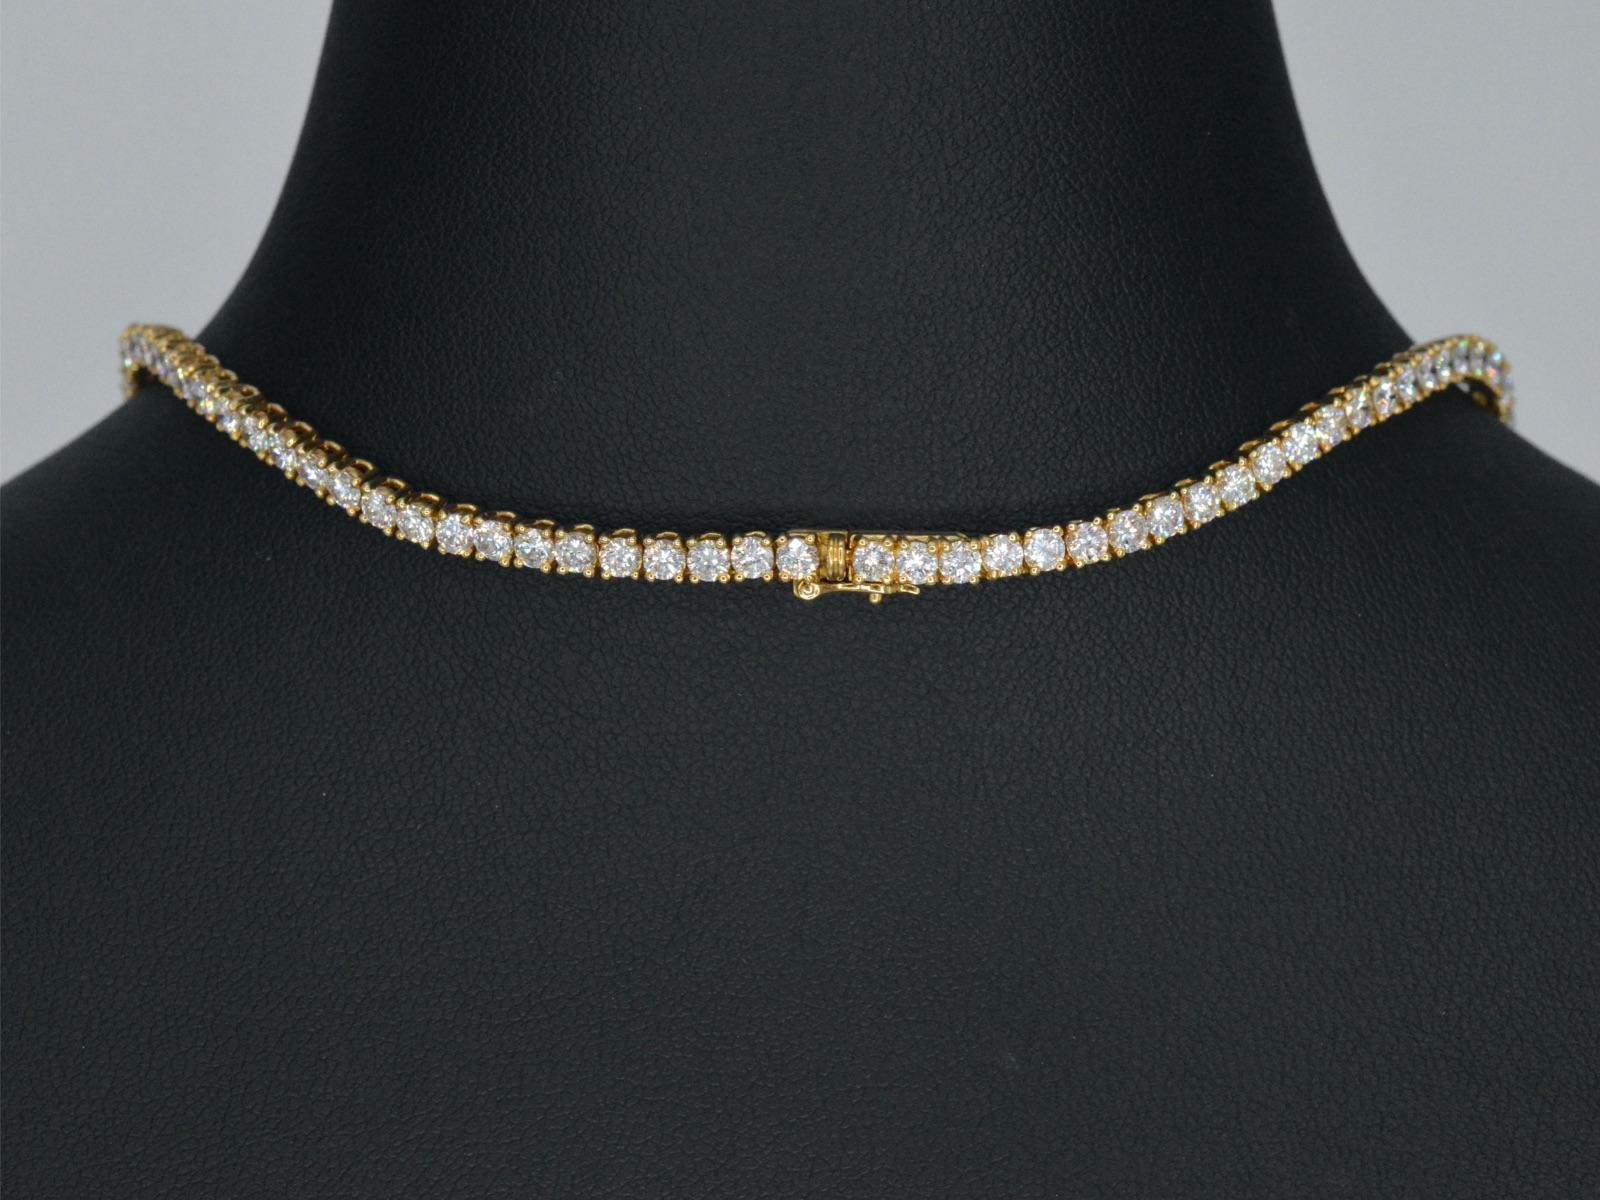 Contemporary Cartier Tennis-Collier Necklace with 8.88 Carat Diamonds